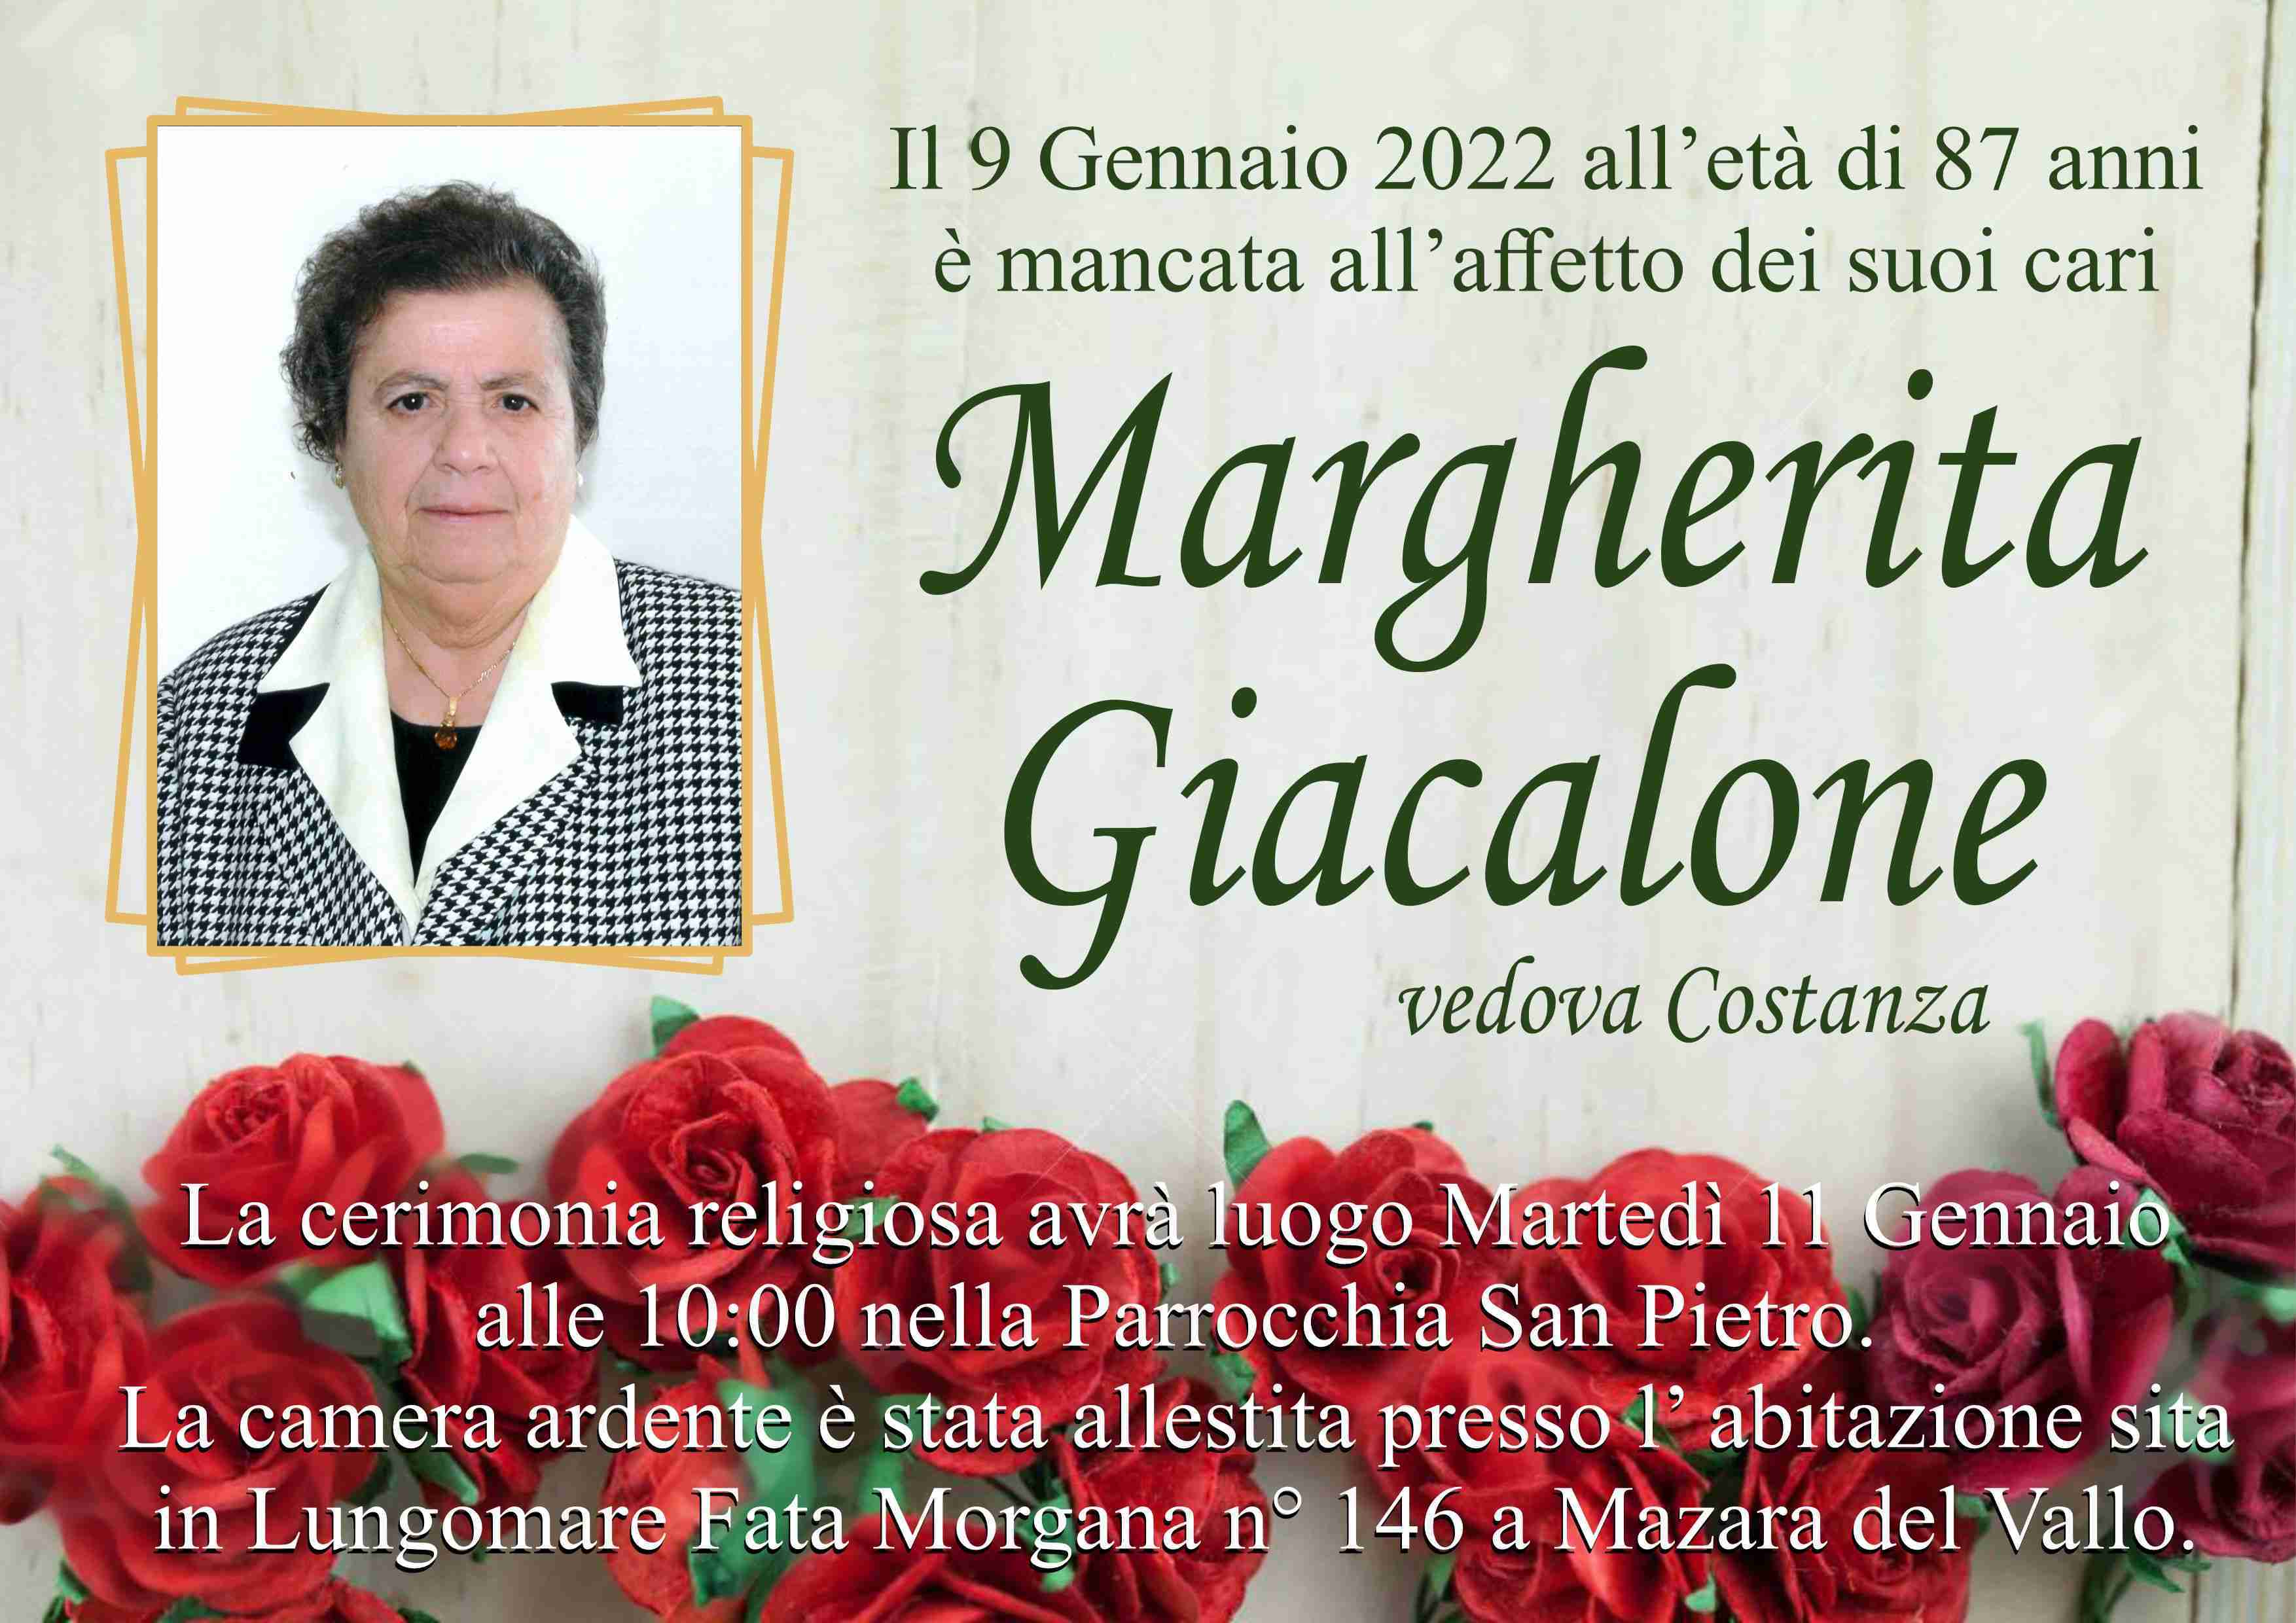 Margherita Giacalone